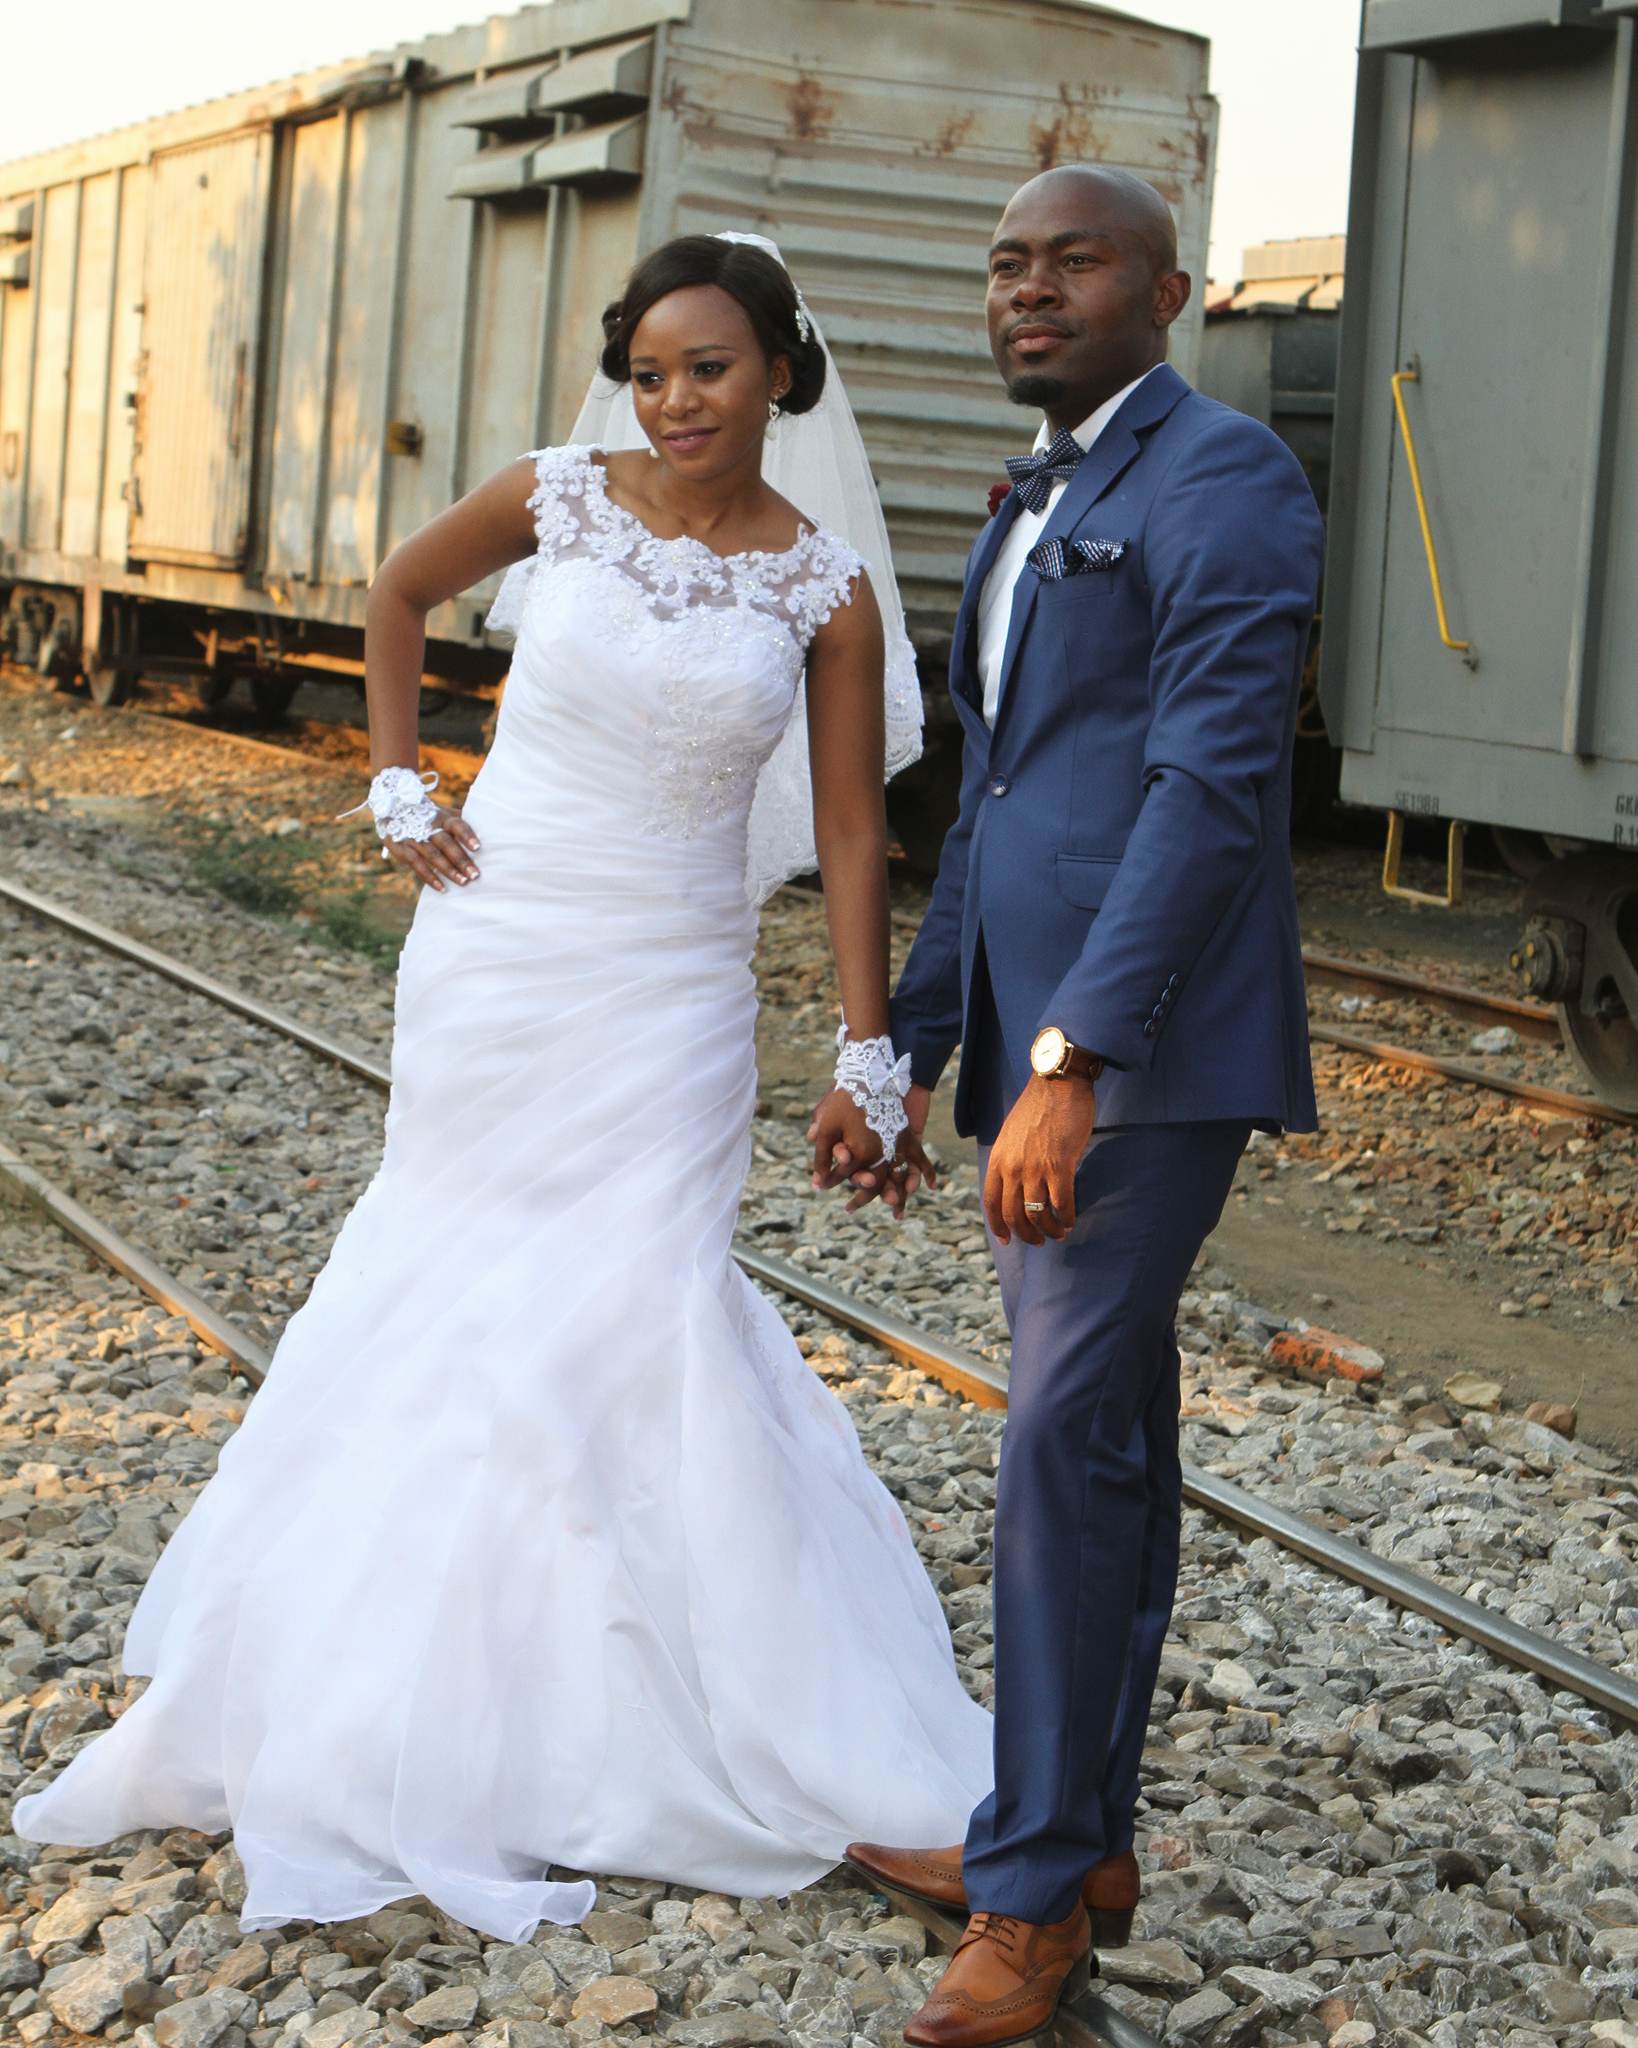 Wedding Dress In Zambia Wedding Dress In The World 